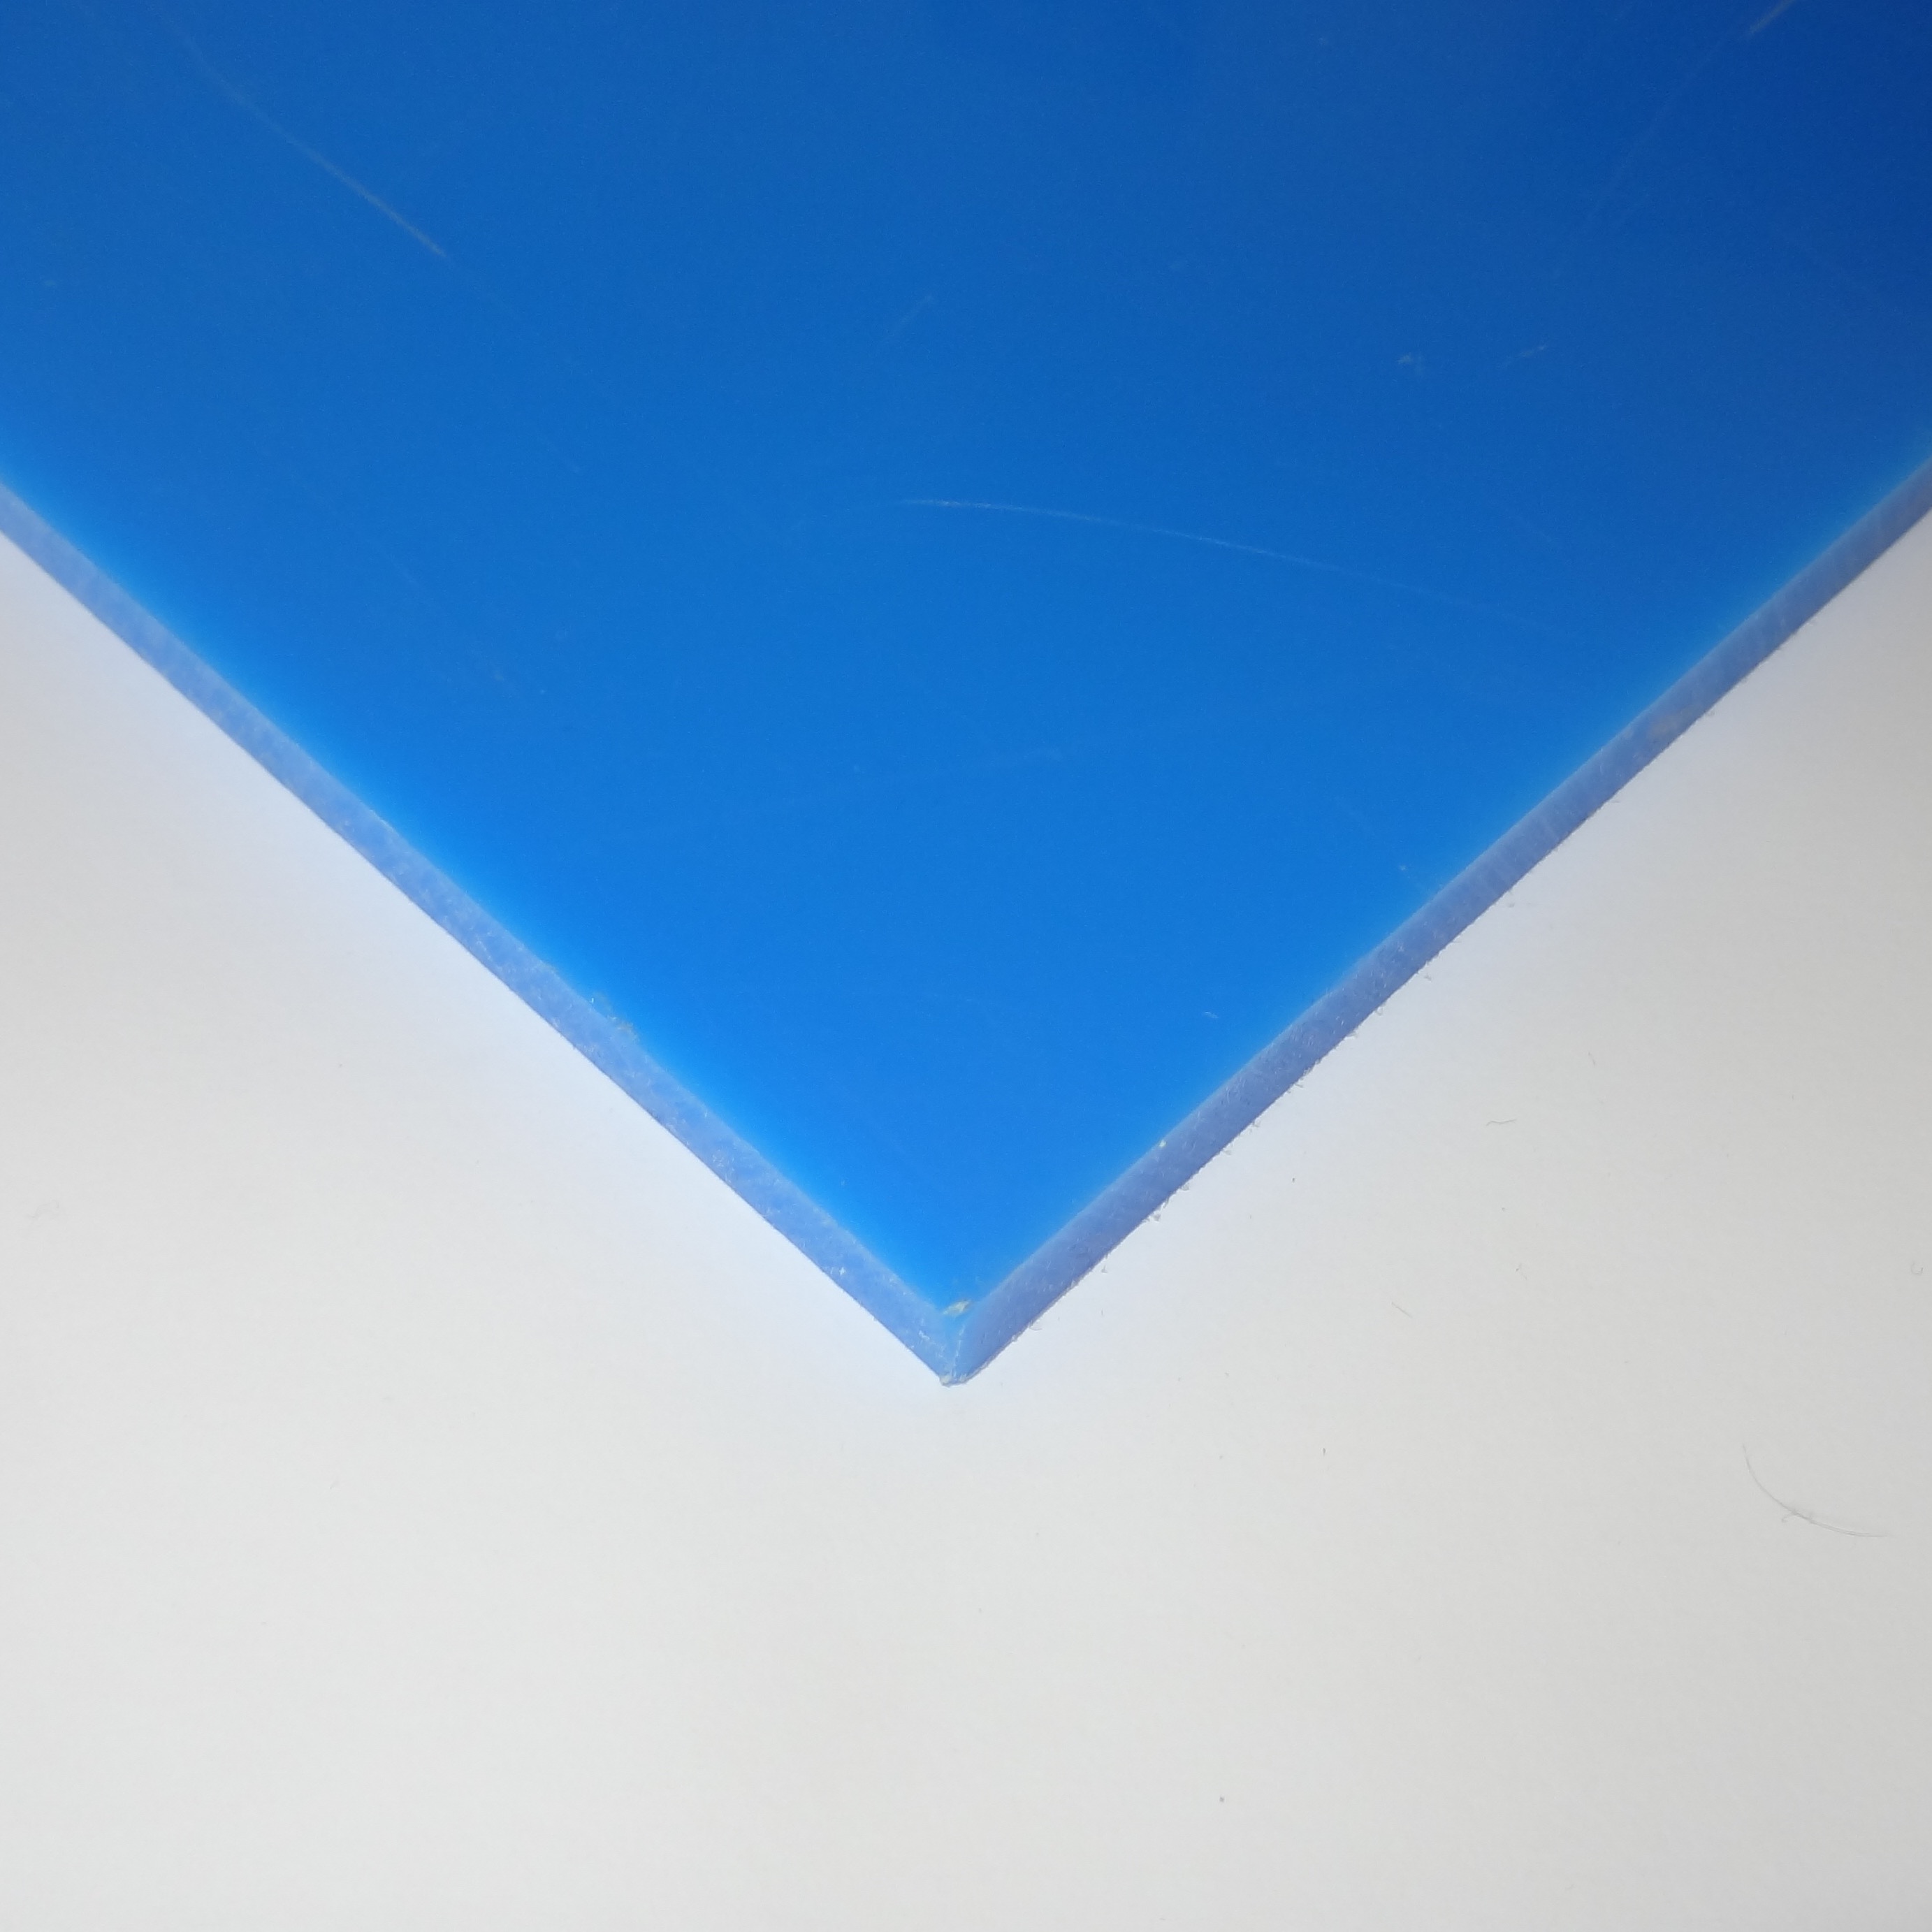 3" thick NYLATRON® MC 901 Unfilled Cast NYLON Laminate Sheet, blue,  24"W x 48"L sheet